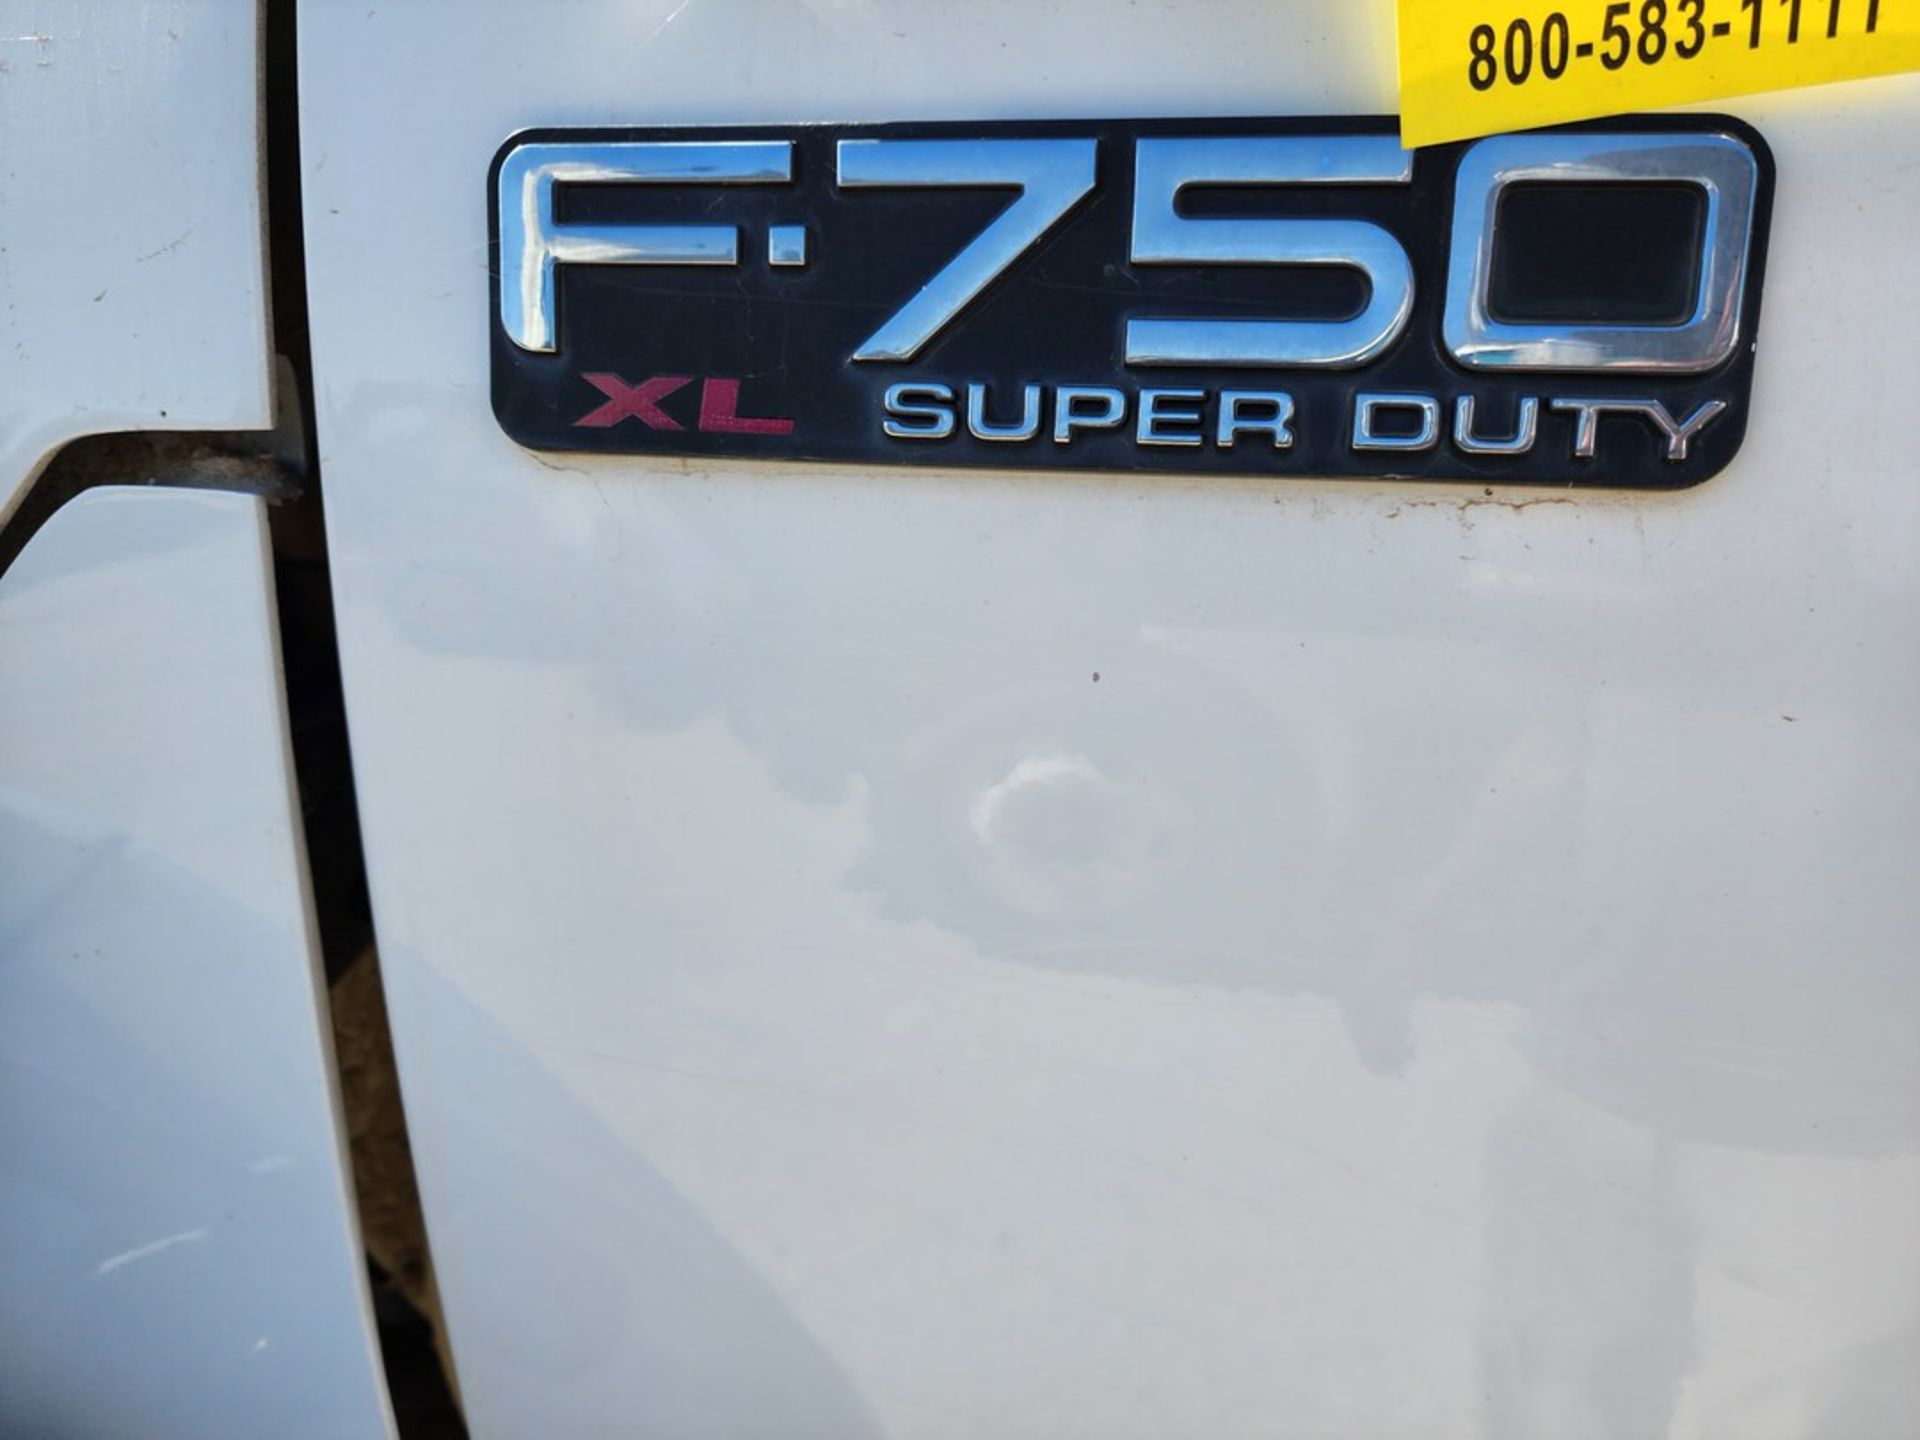 2012 Ford F-750 XL Super Duty Water Truck (Diesel) Mileage: 7,999 ; Vin: 3FRW7FL8CV442414; TX Plate: - Image 9 of 27